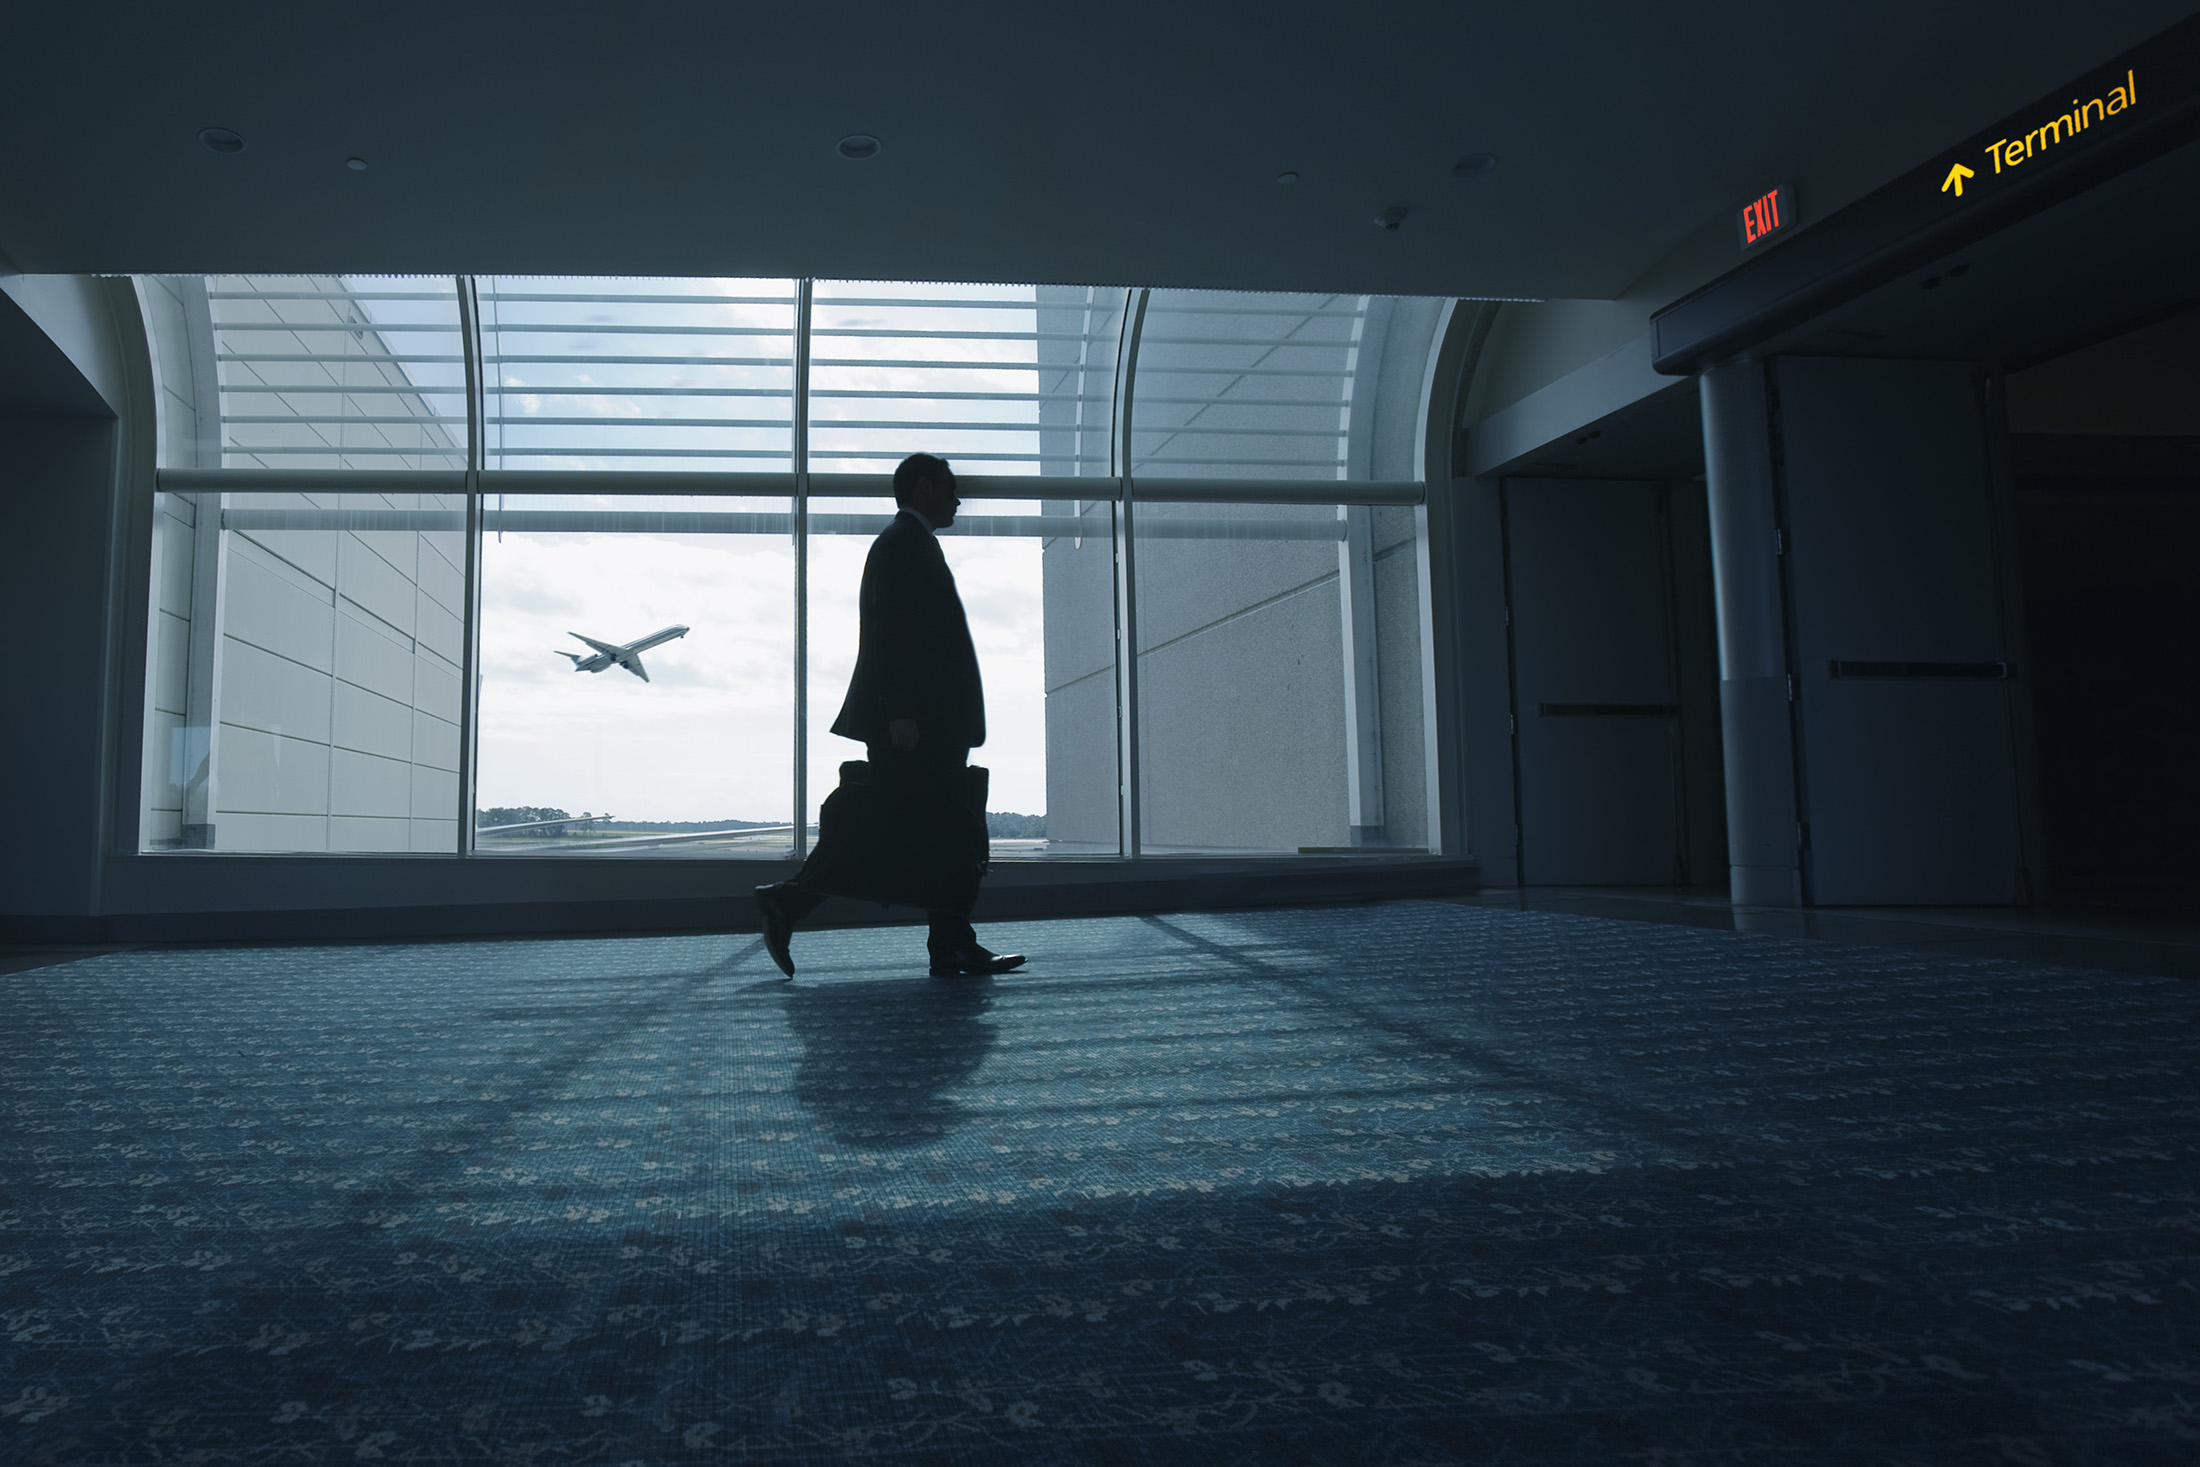 Businessman walking in airport